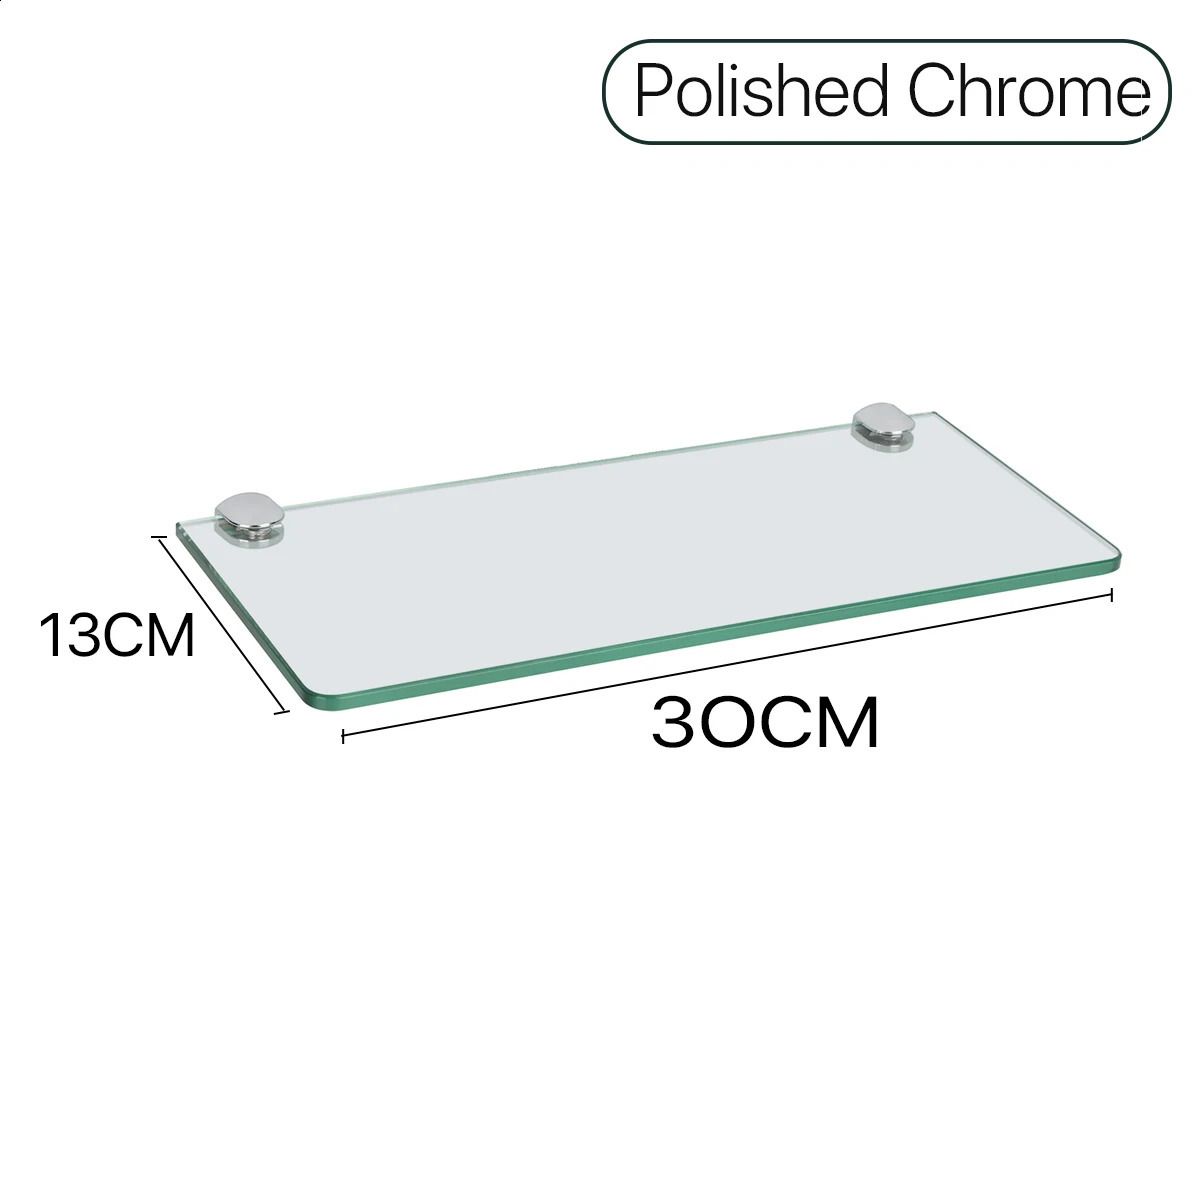 Chrome poli 30cm